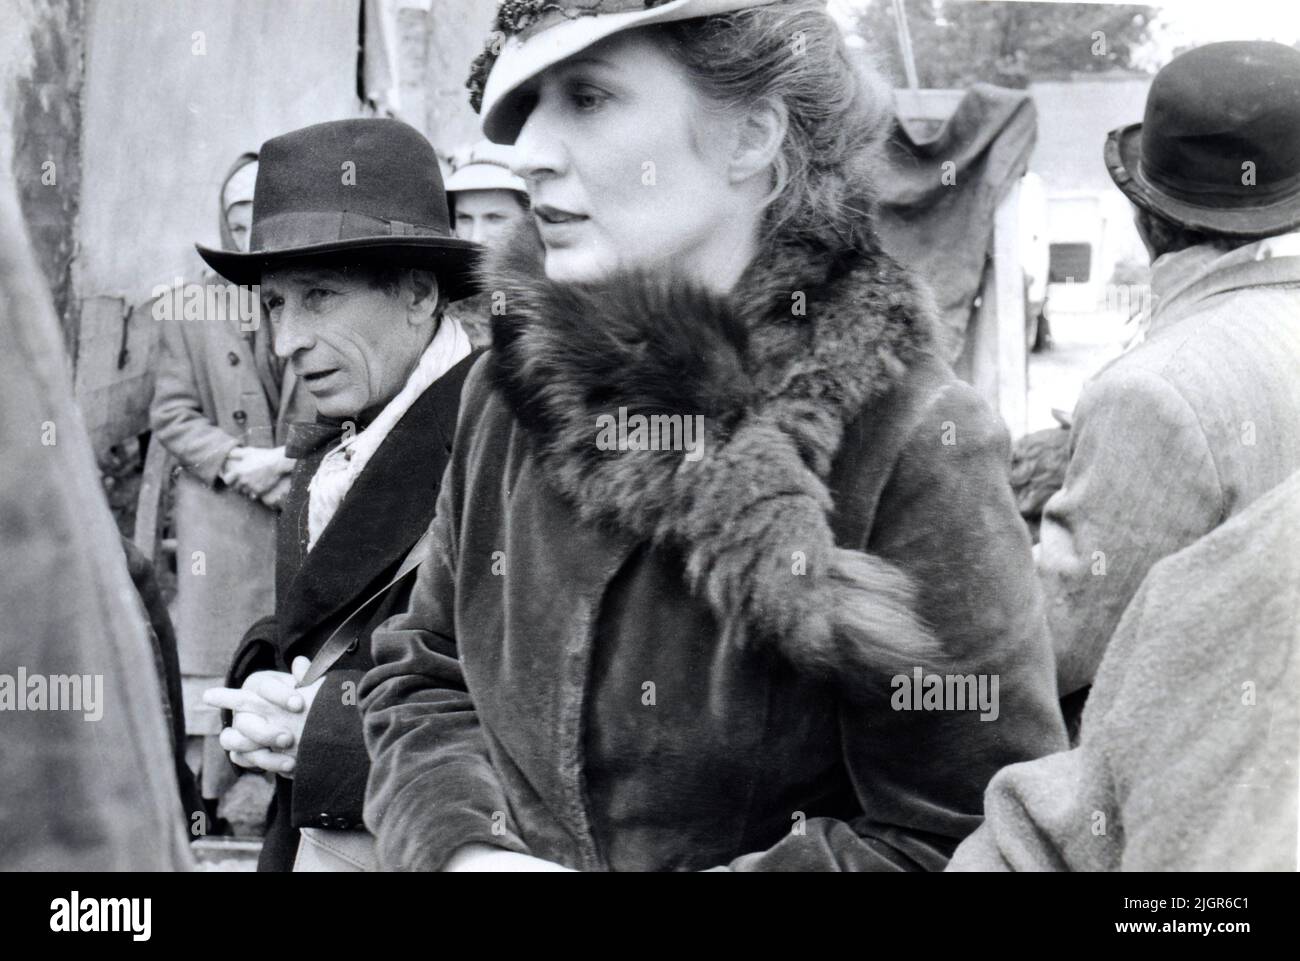 L'attrice rumena Dorina Lazar durante le riprese del film 'Înghițitorul de săbii', regista Alexa Visarion, 1980 Foto Stock